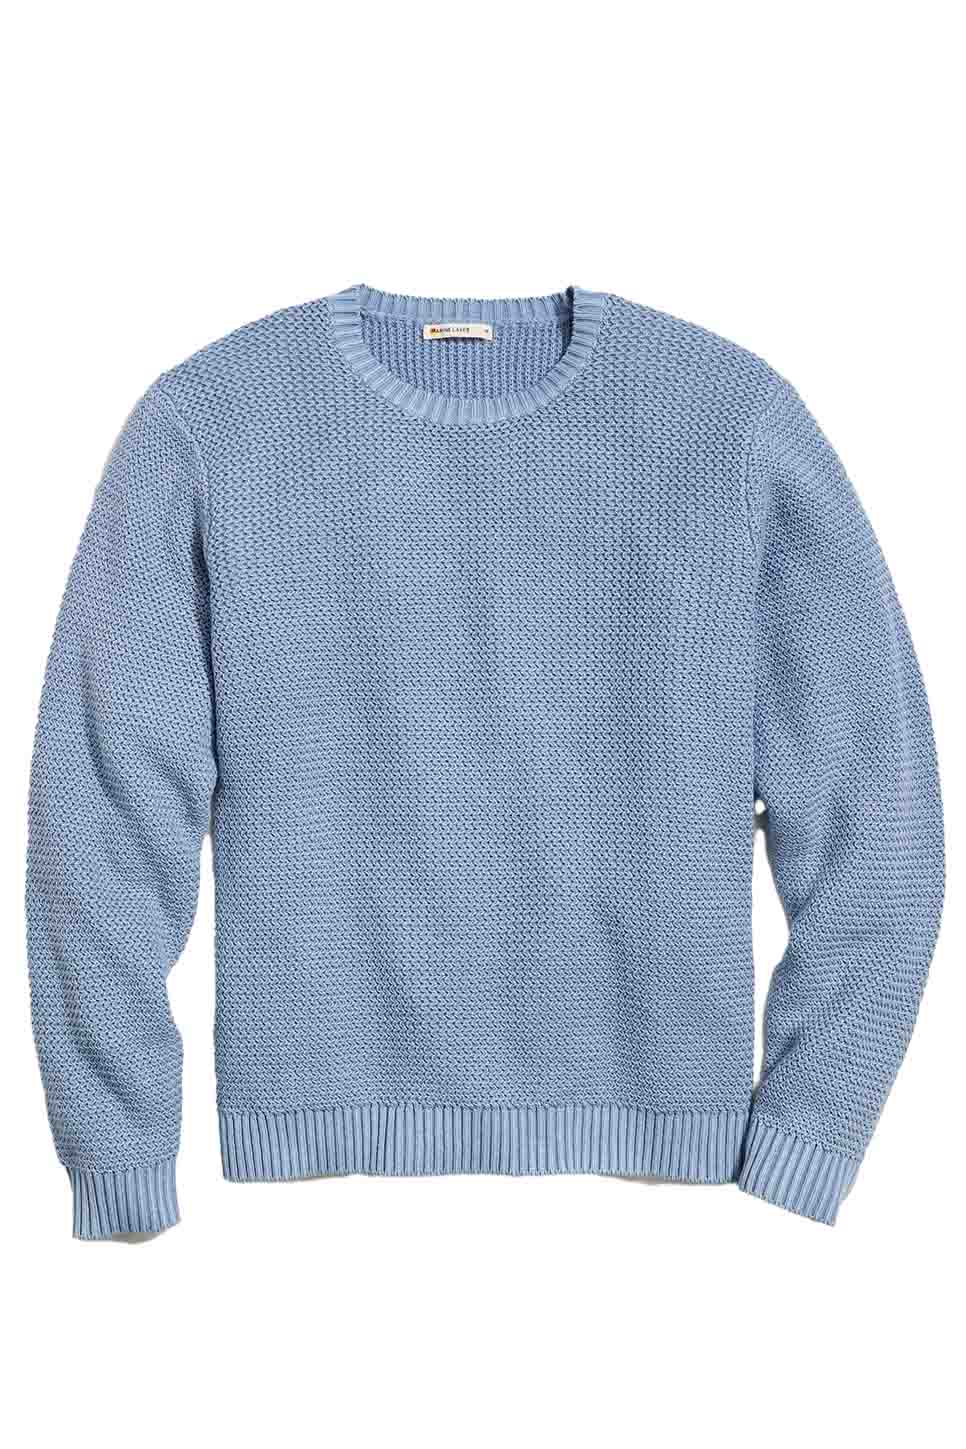 Marine Layer - Garment Dye Crew Sweater - Coronet Blue - Flatlay